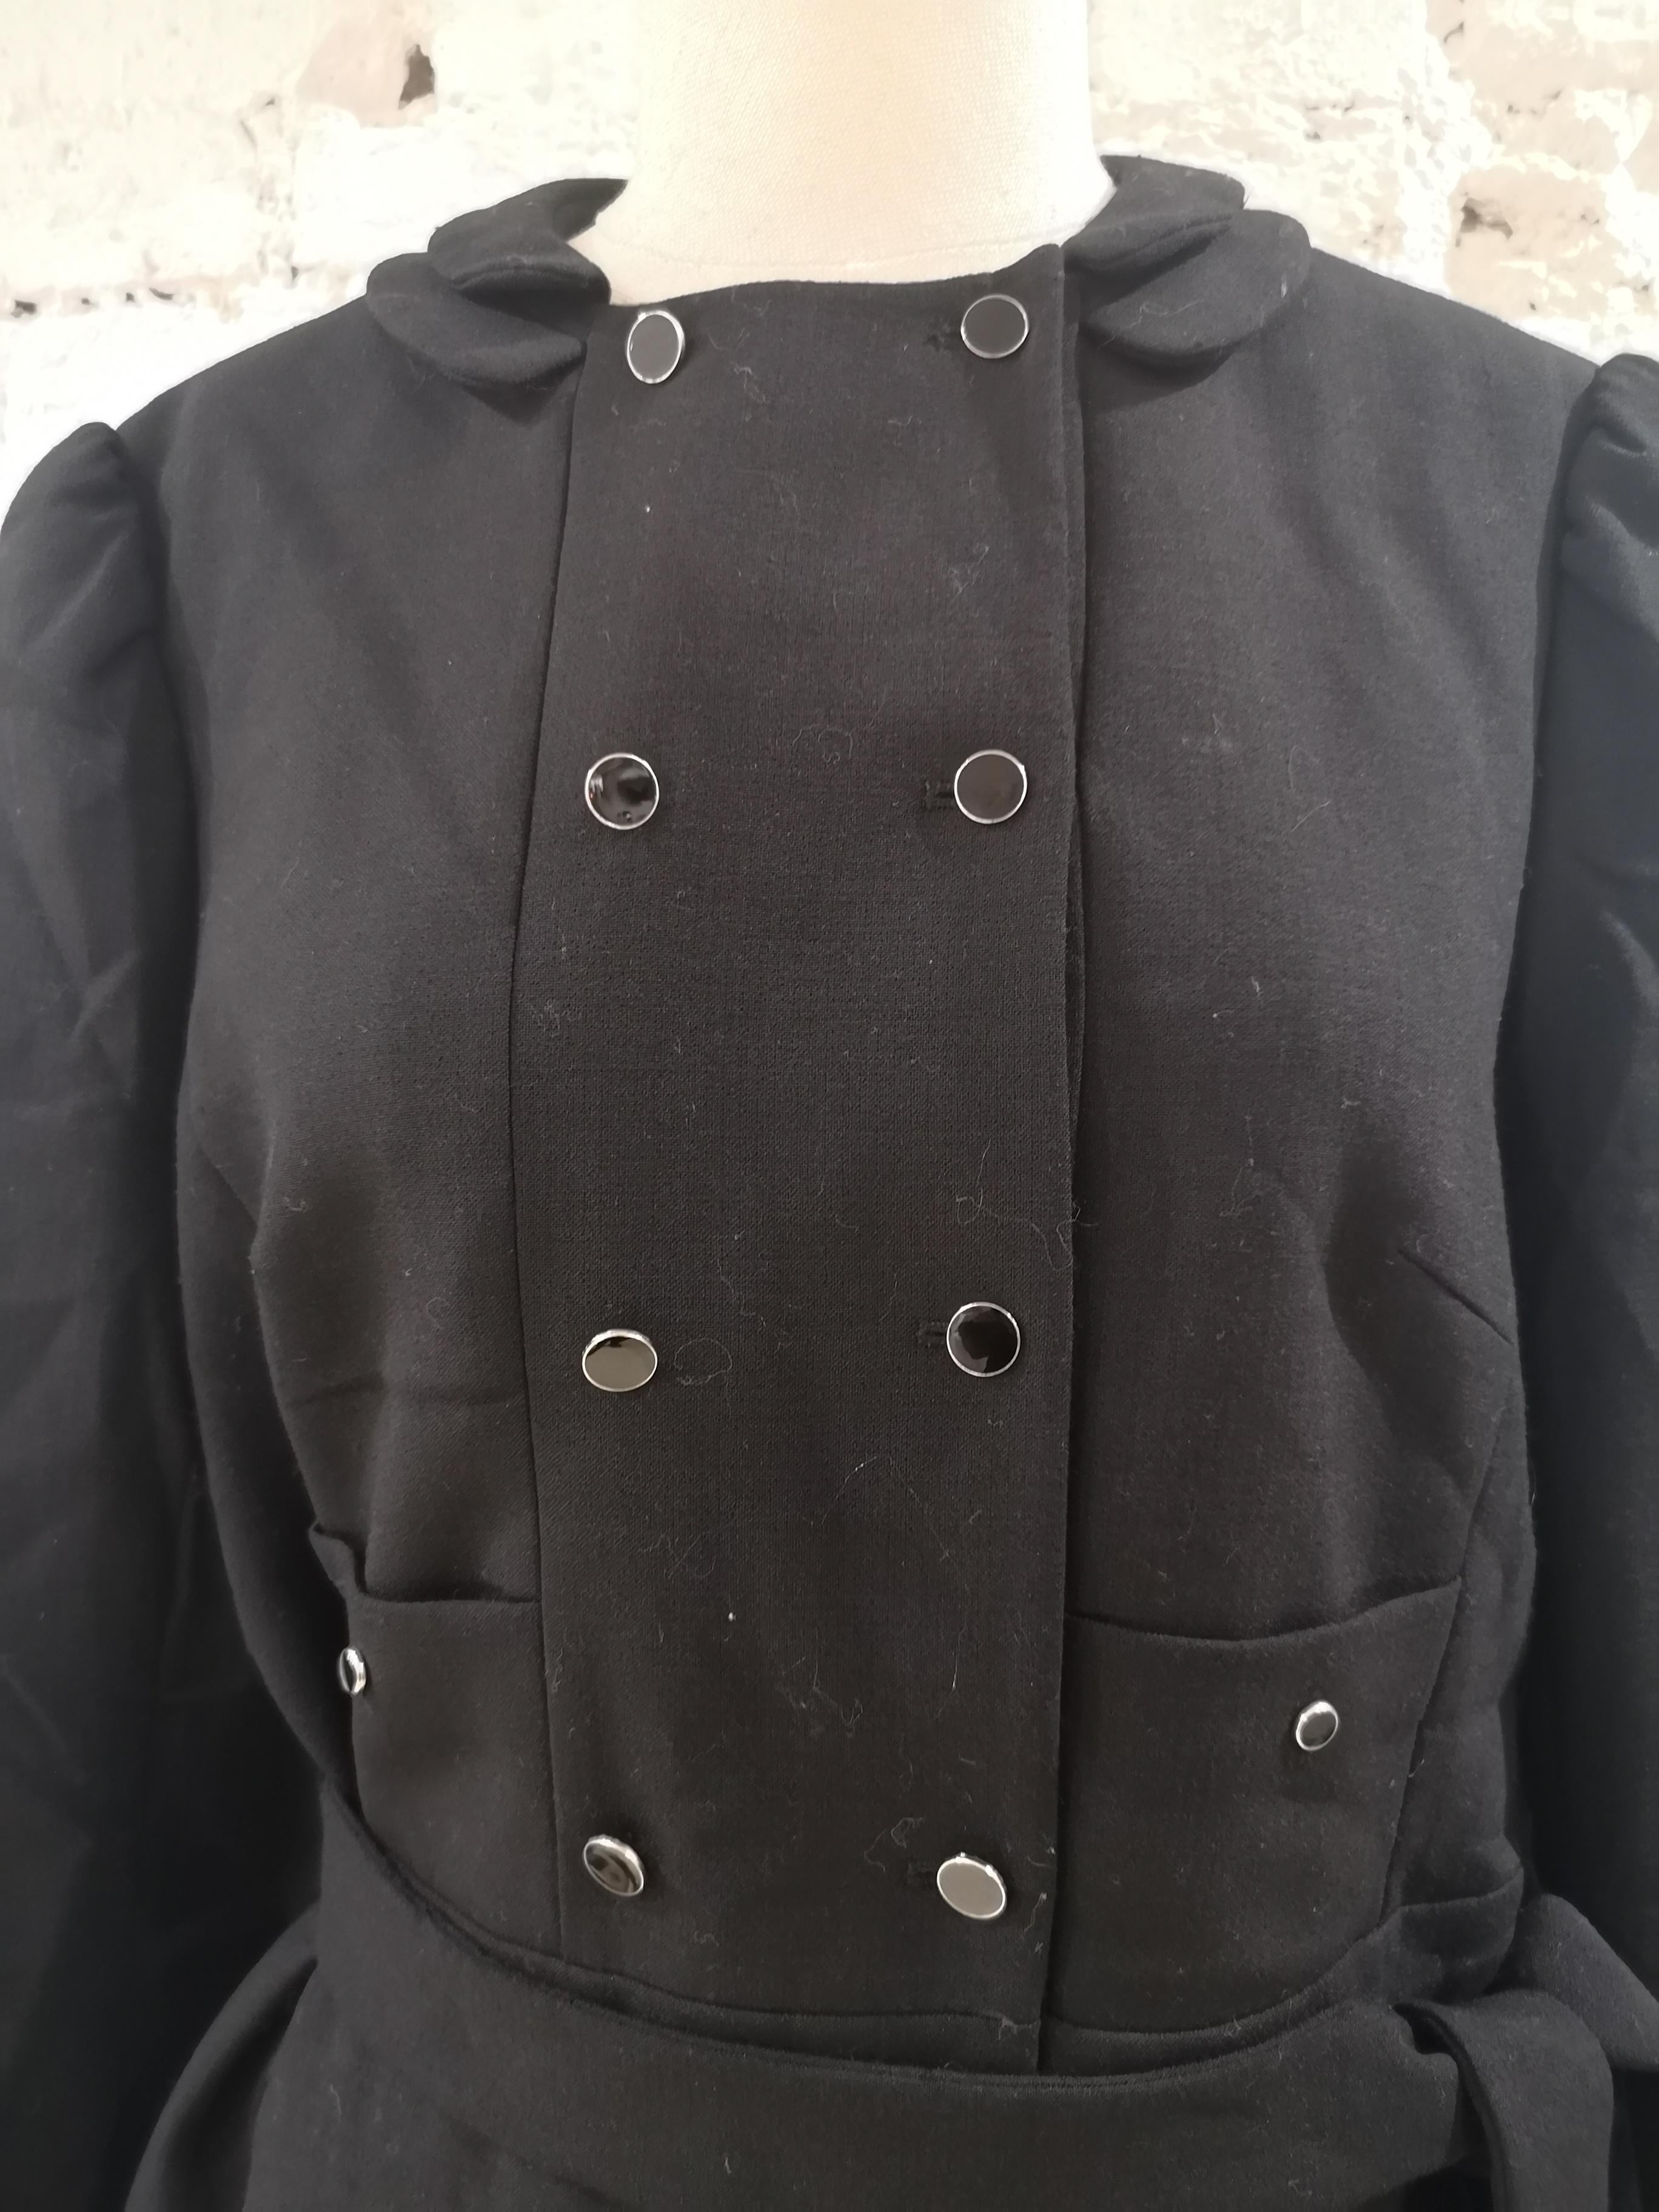 Hoss black coat size 40 it